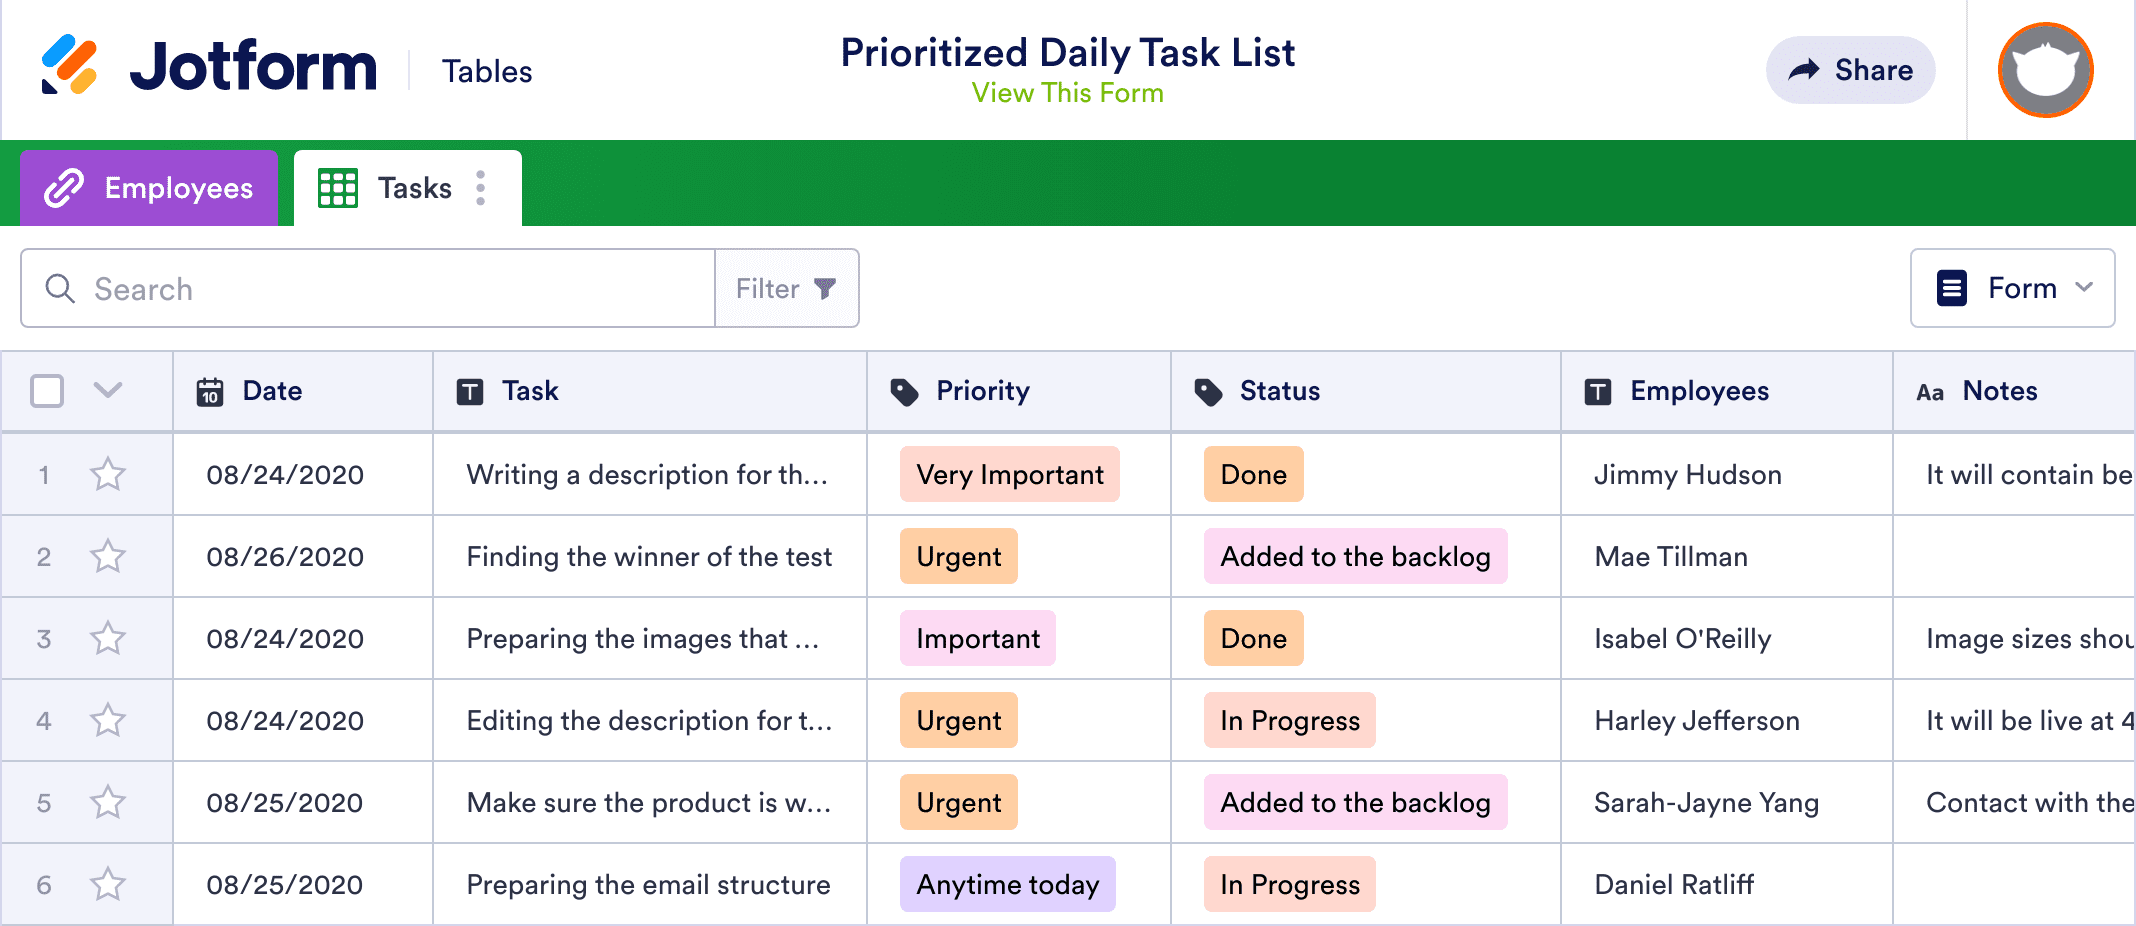 Prioritized Task List Template